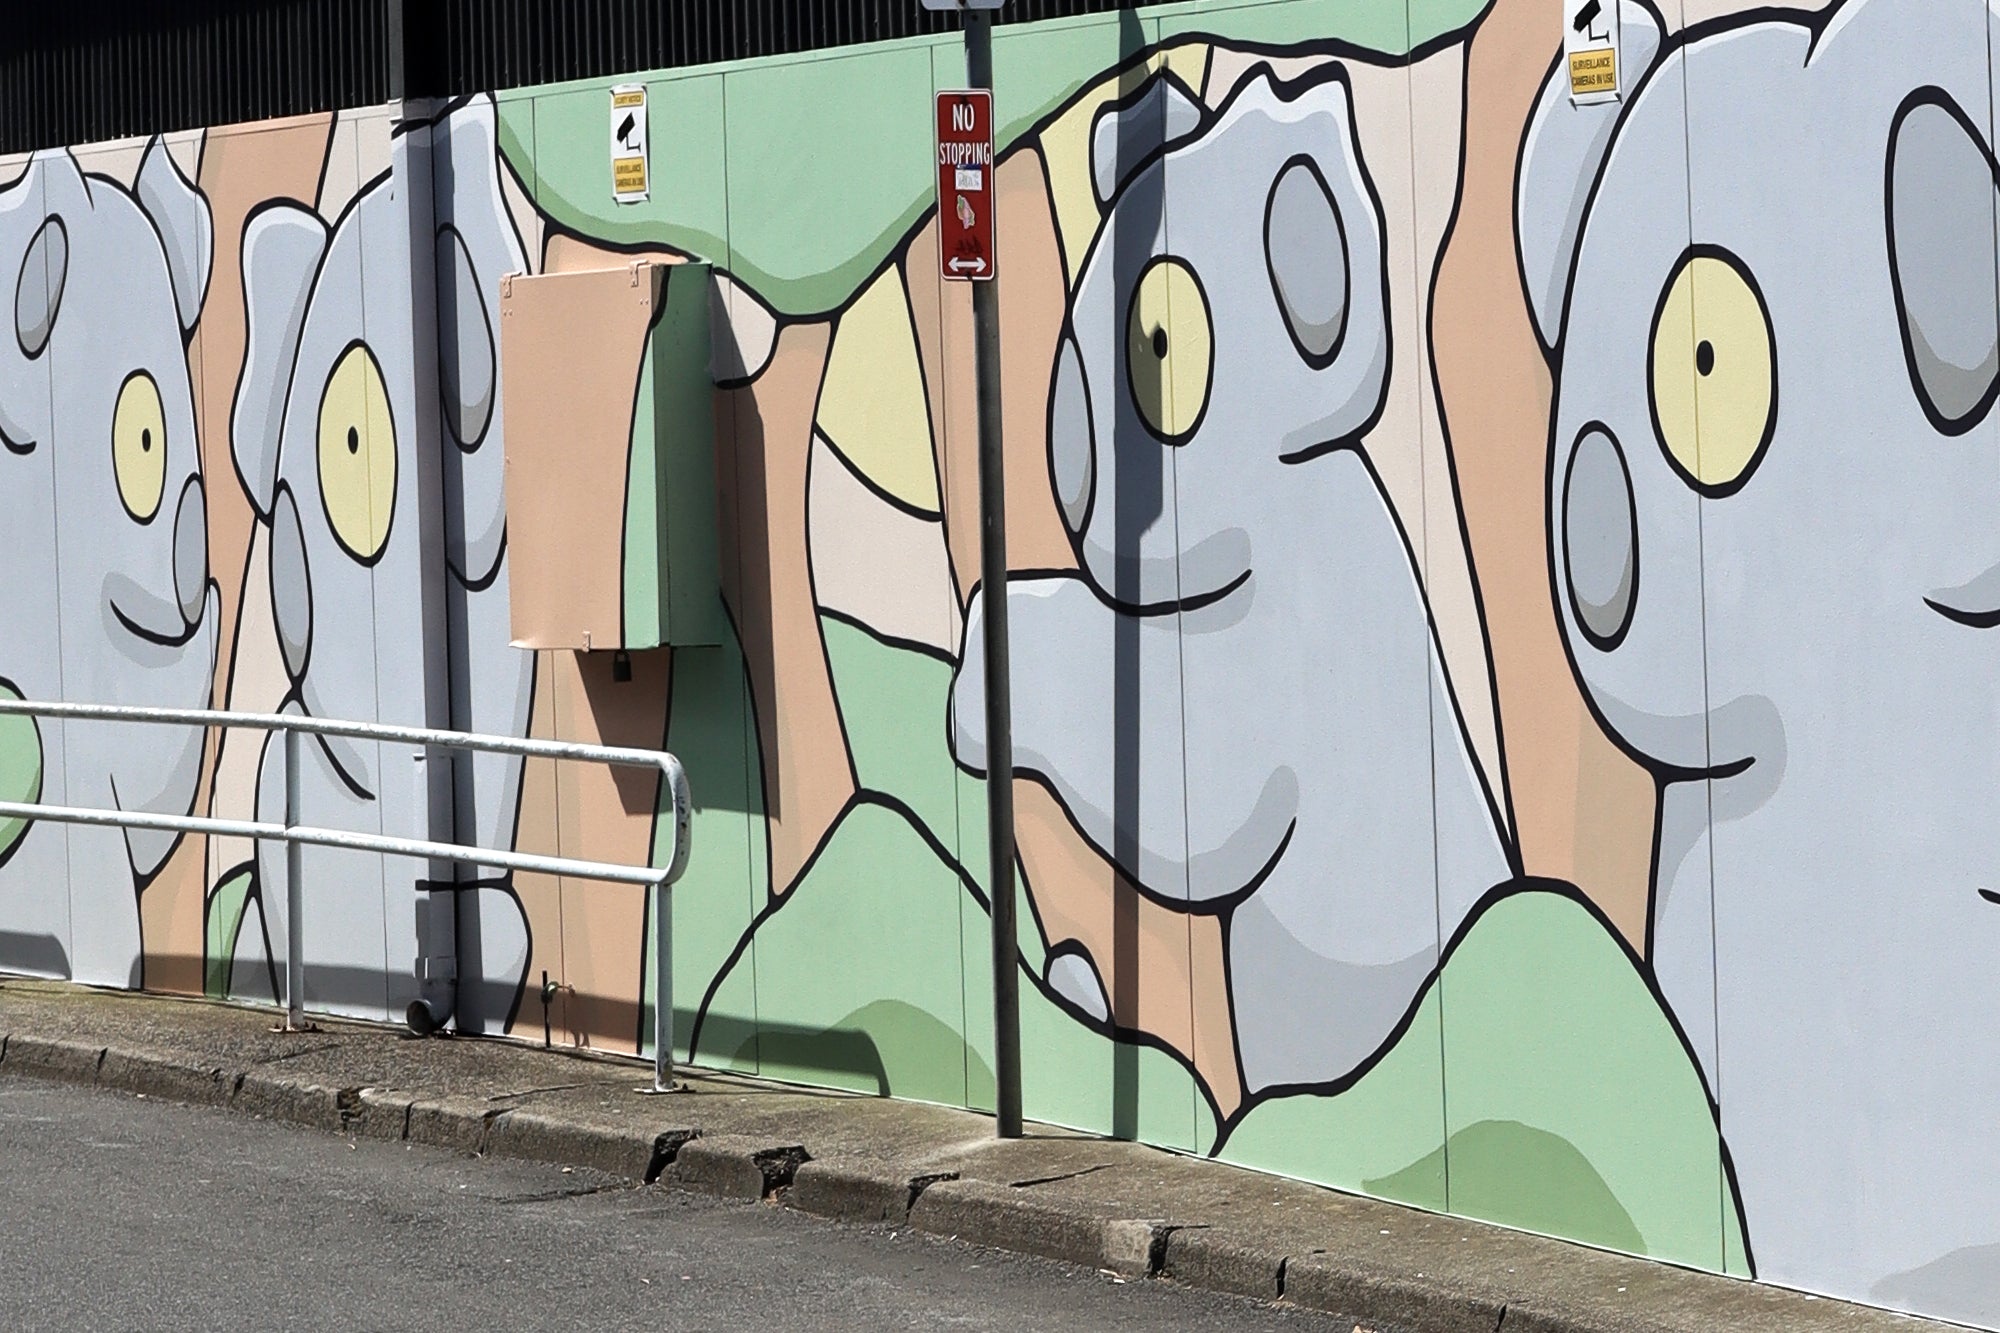 Coffs Harbour Street Art Koala Mural by Brentos